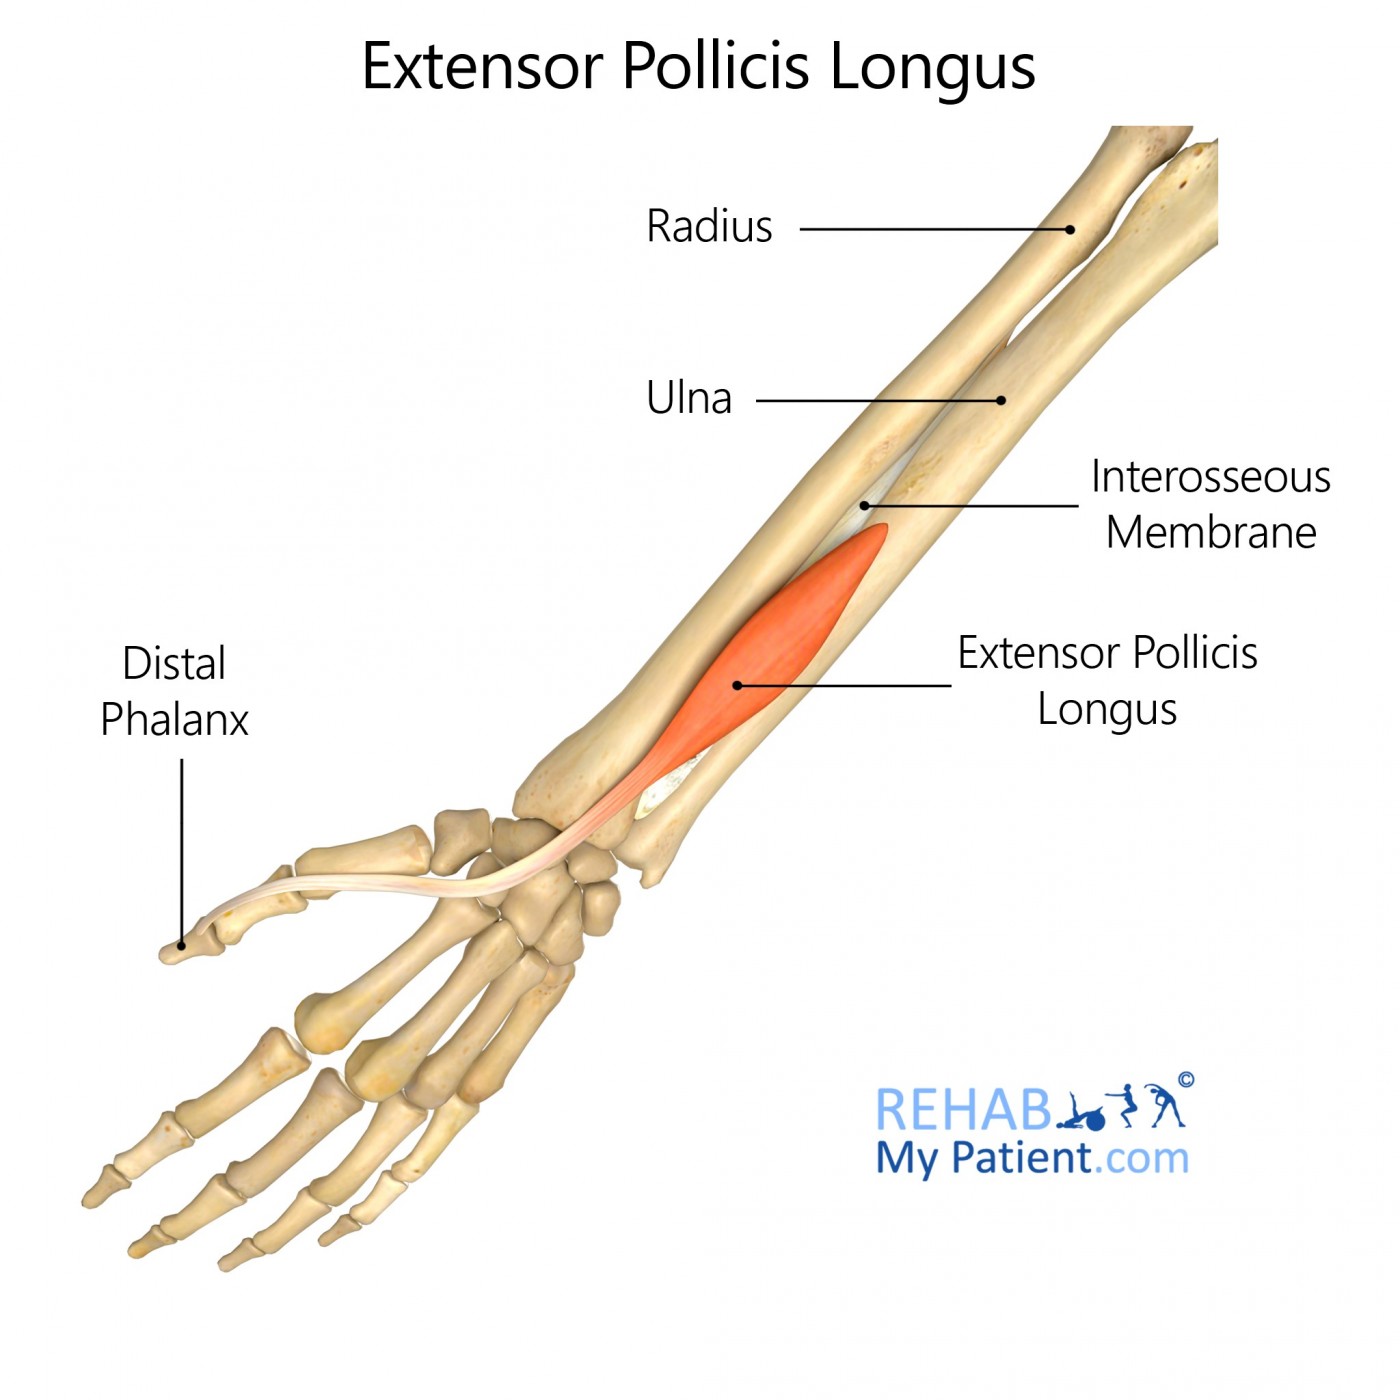 Extensor Pollicis Longus